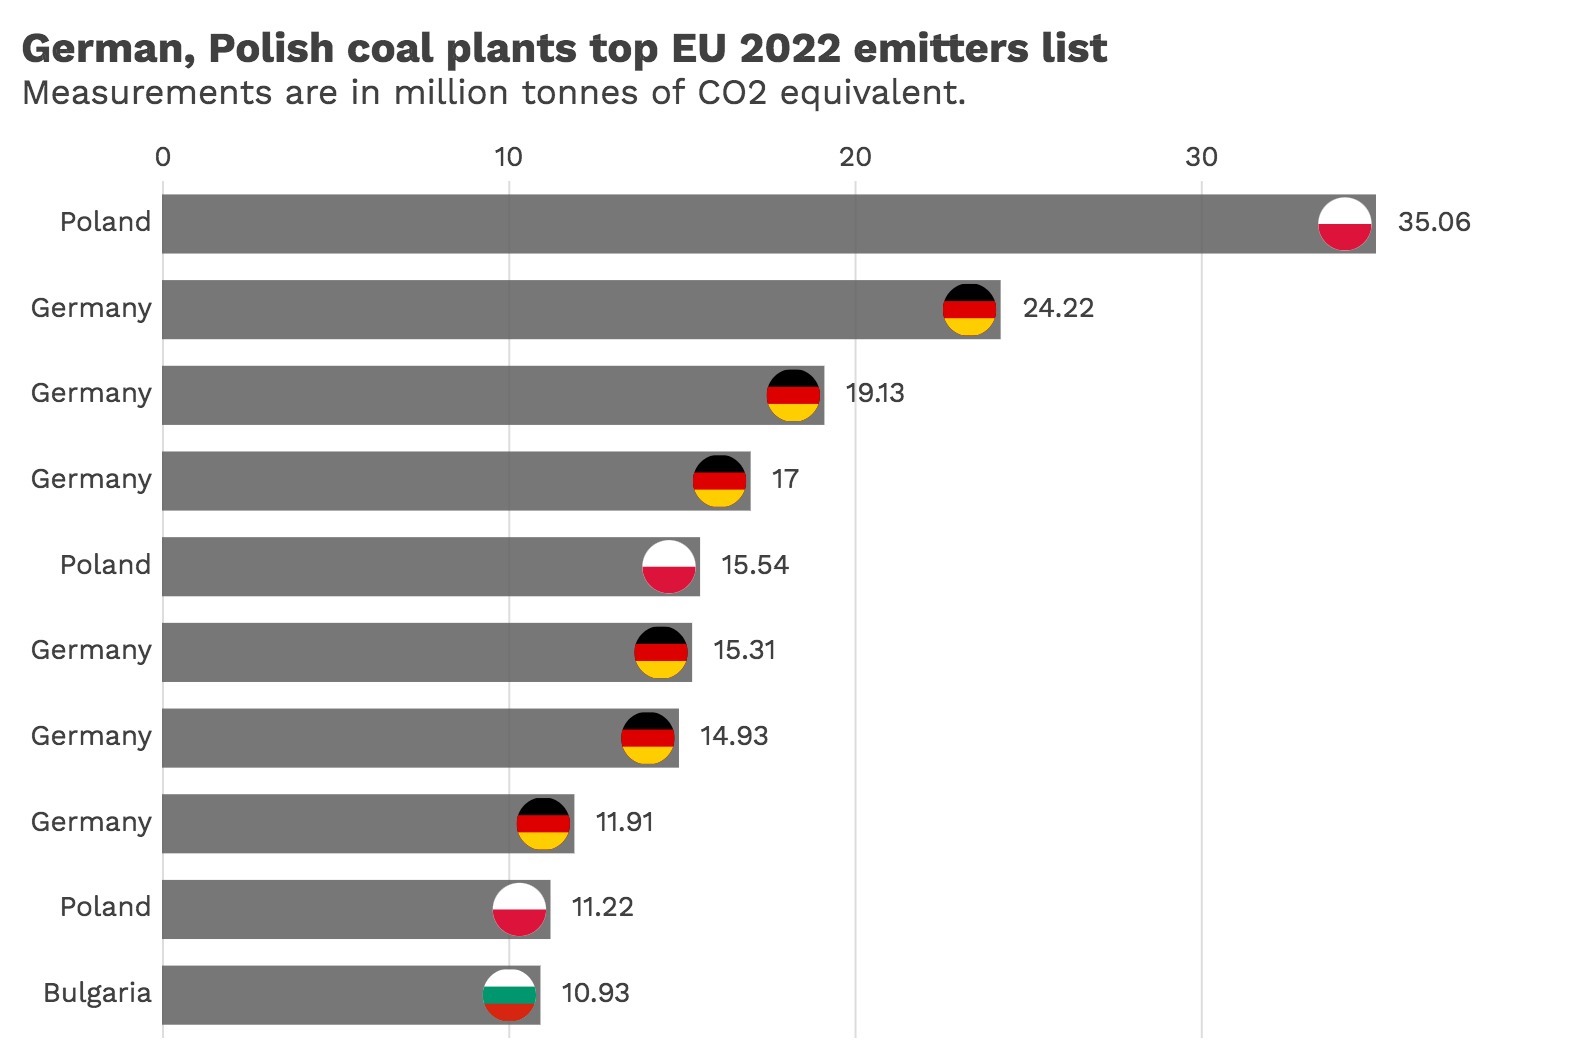 Chart of EU coal plants top emitters in 2022